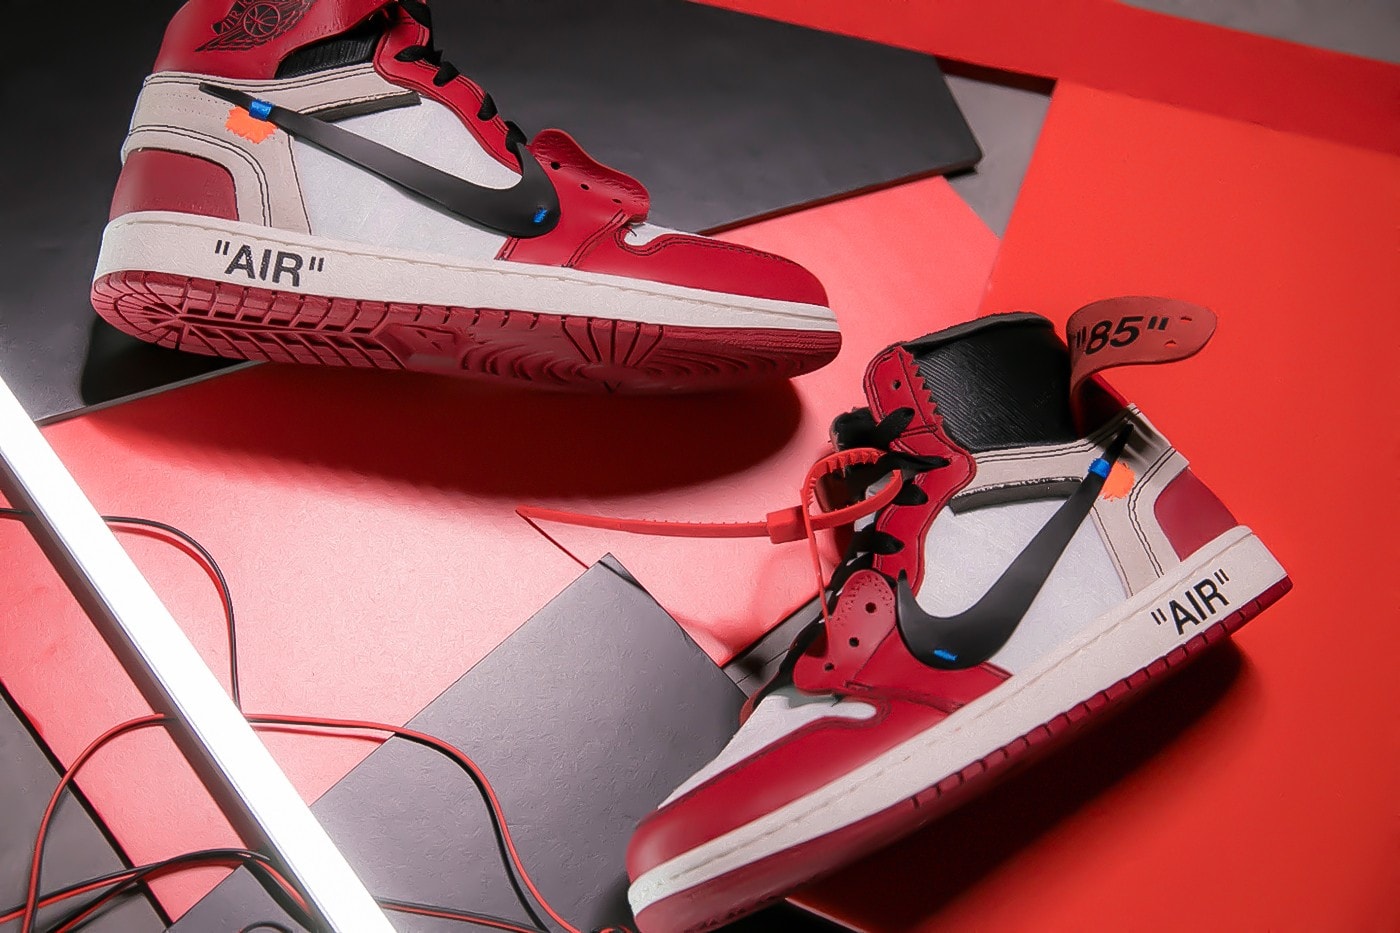 Virgil Abloh Off-White™ Nike Air Jordan 1 Retro High Chicago Resale Prices Skyrocket Increase